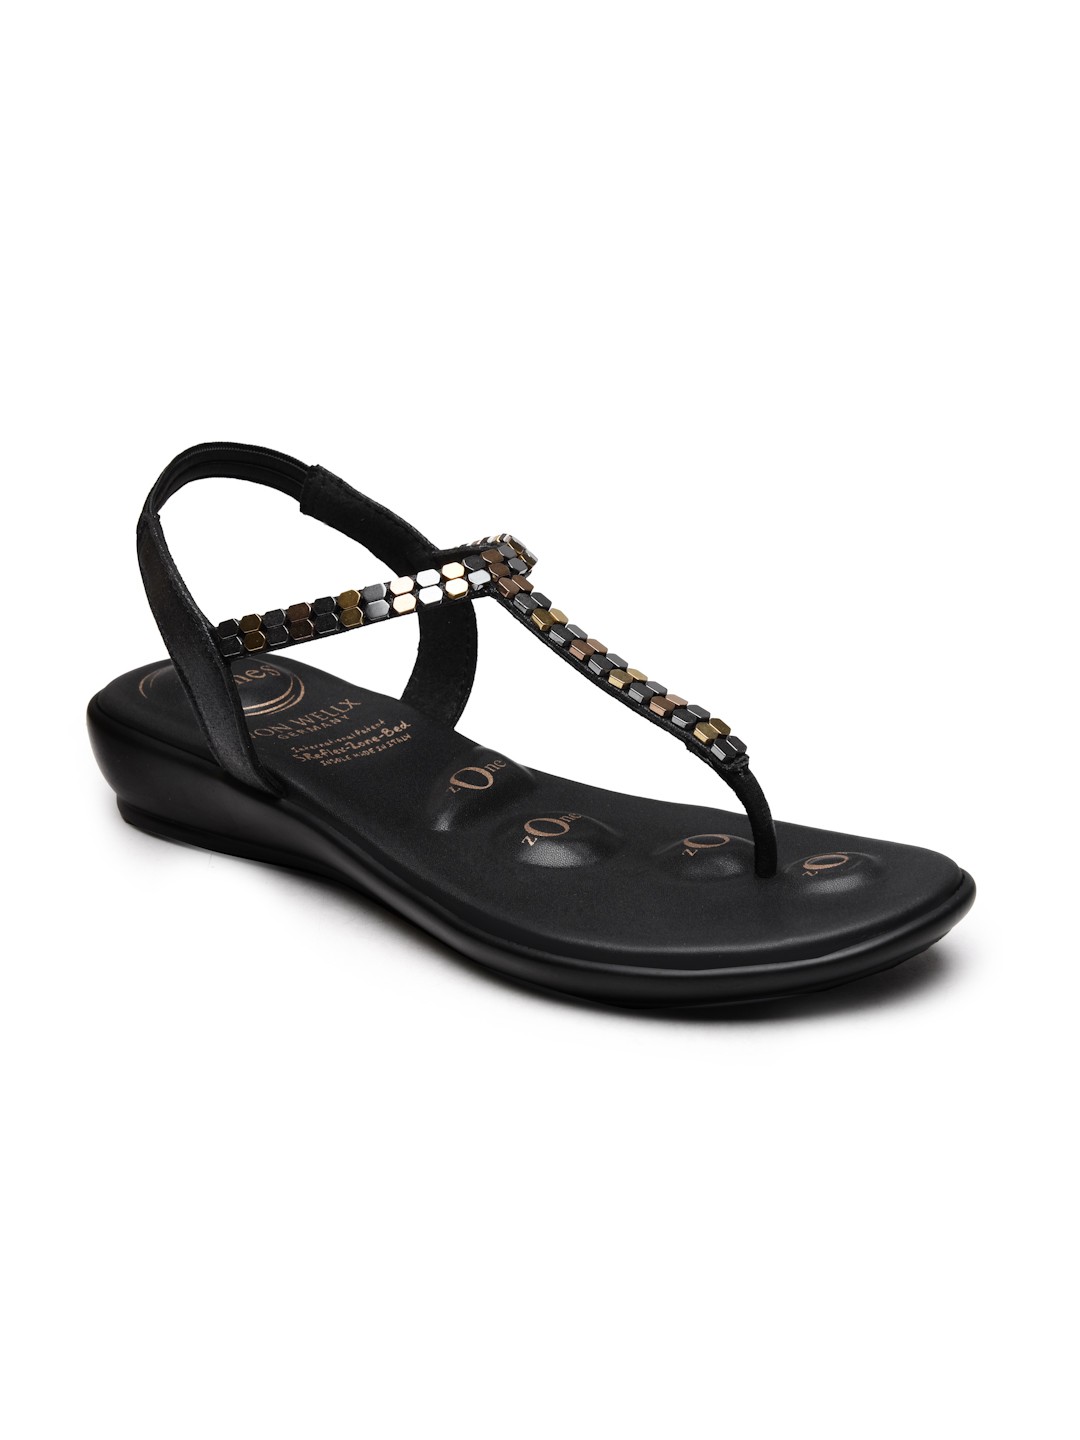 VON WELLX GERMANY comfort women's black casual sandals REGINA